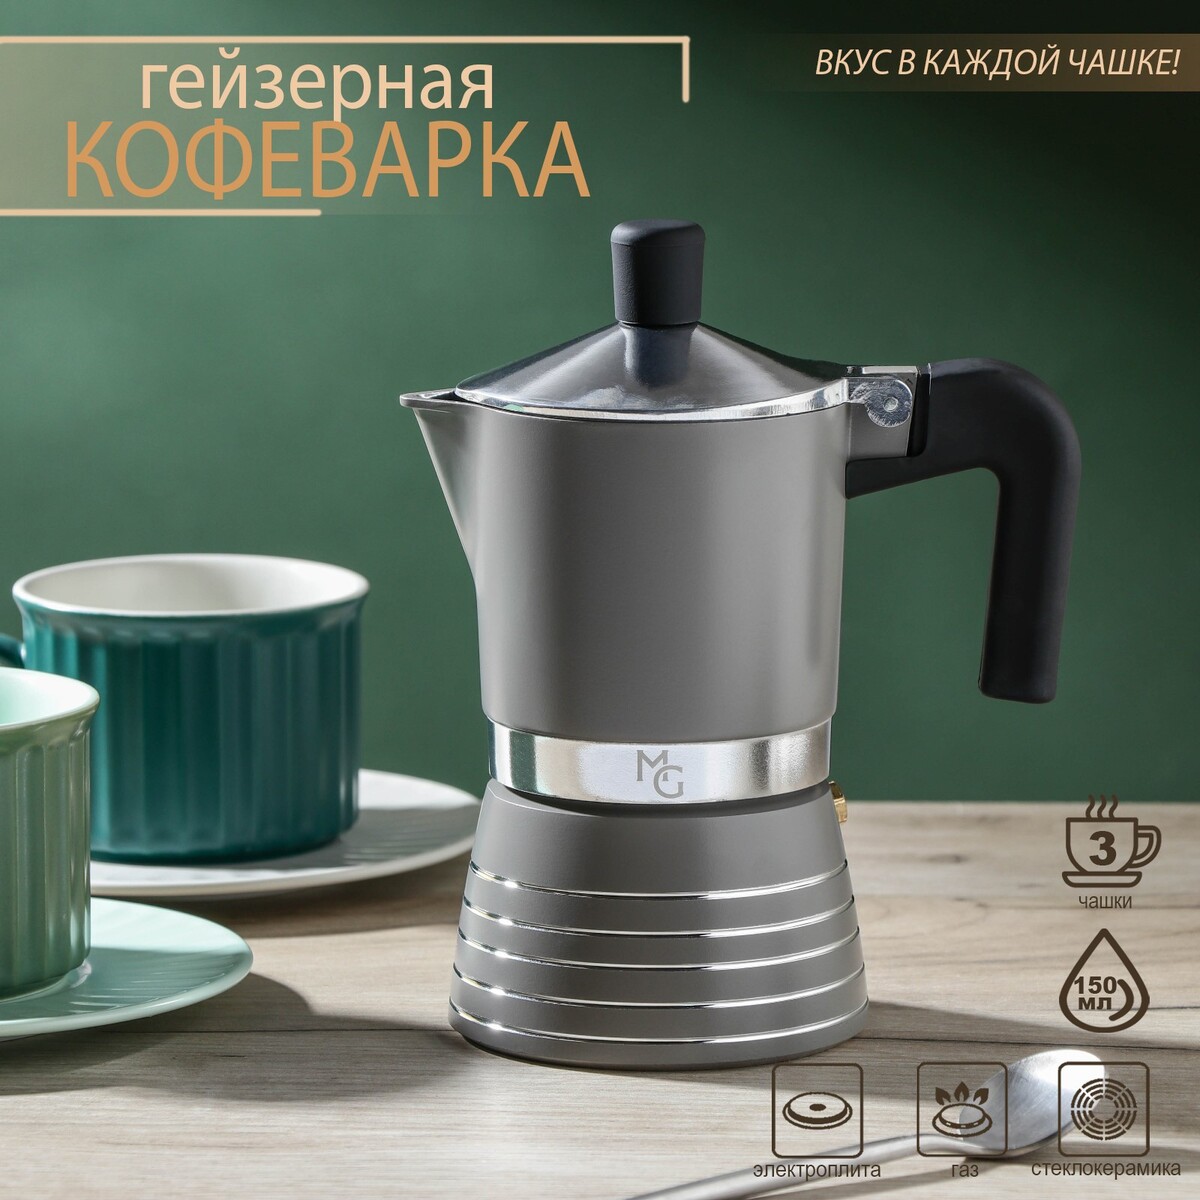 Кофеварка гейзерная magistro moka, на 3 чашки, 150 мл кофеварка гейзерная доляна alum на 3 чашки 150 мл